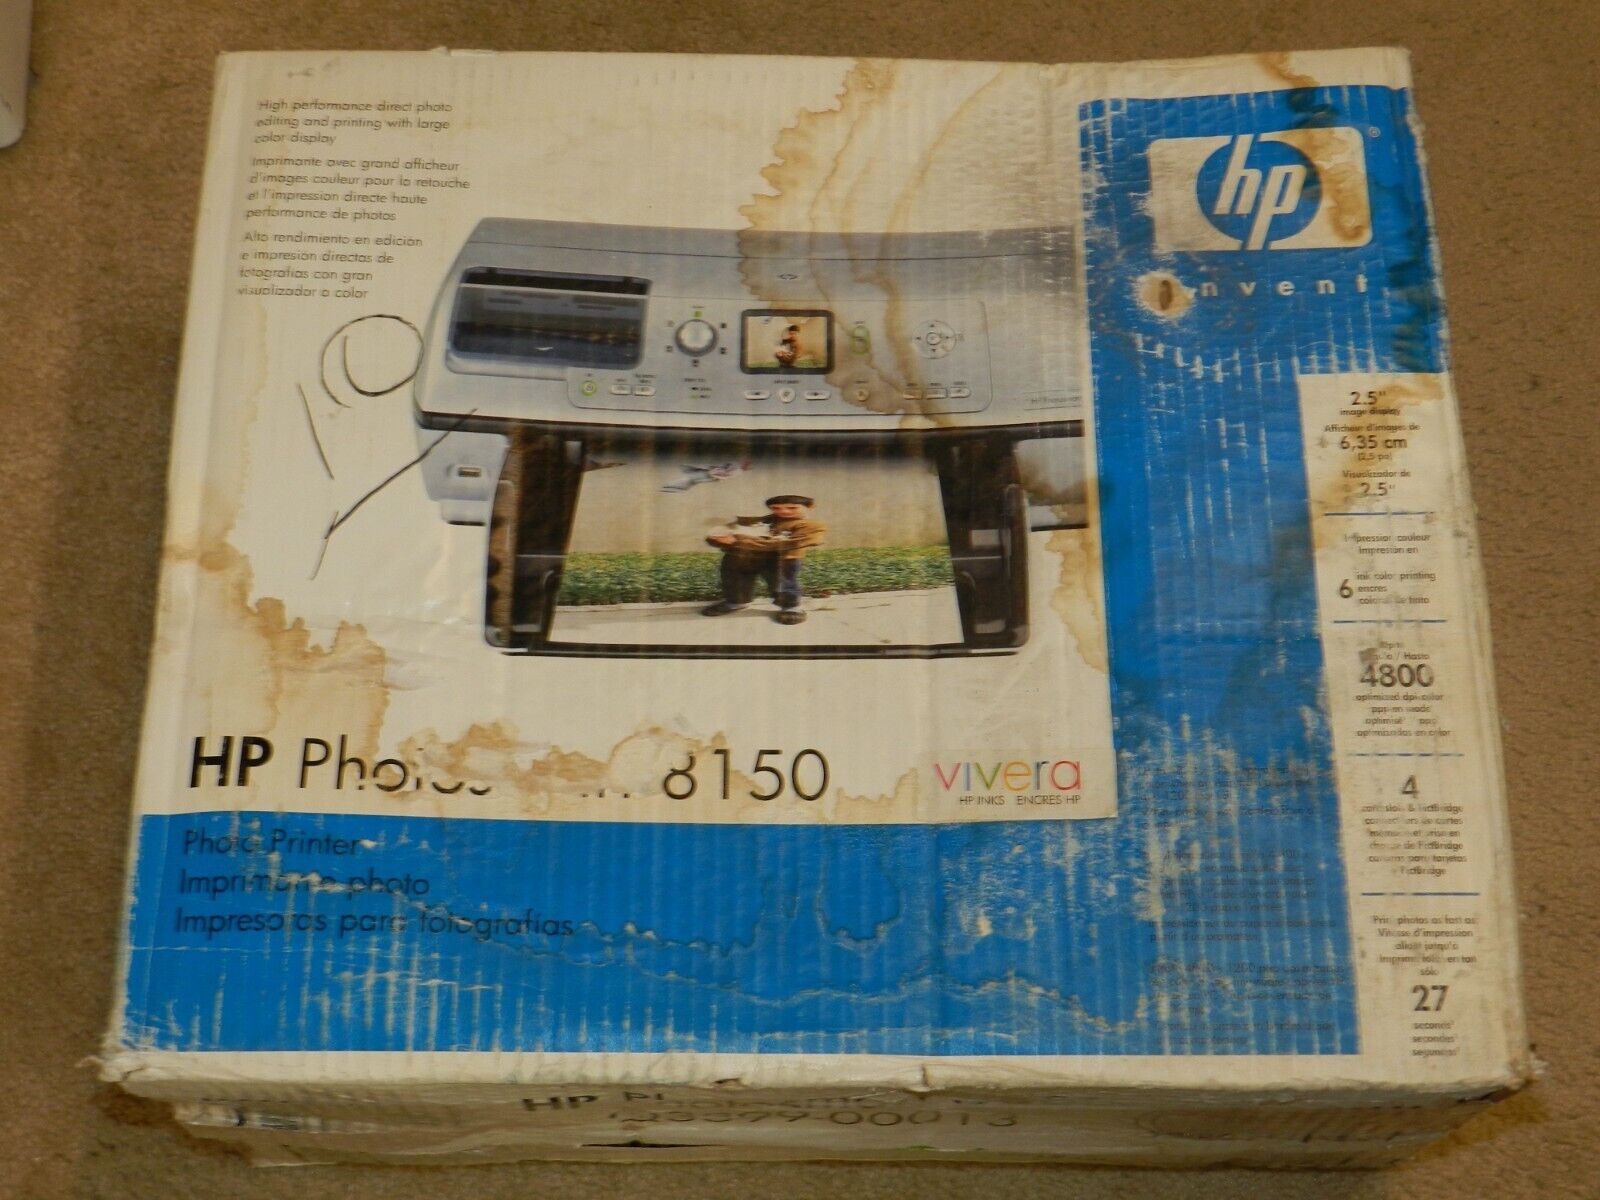 HP Photosmart 8150 Digital Photo Inkjet Printer BRAND NEW